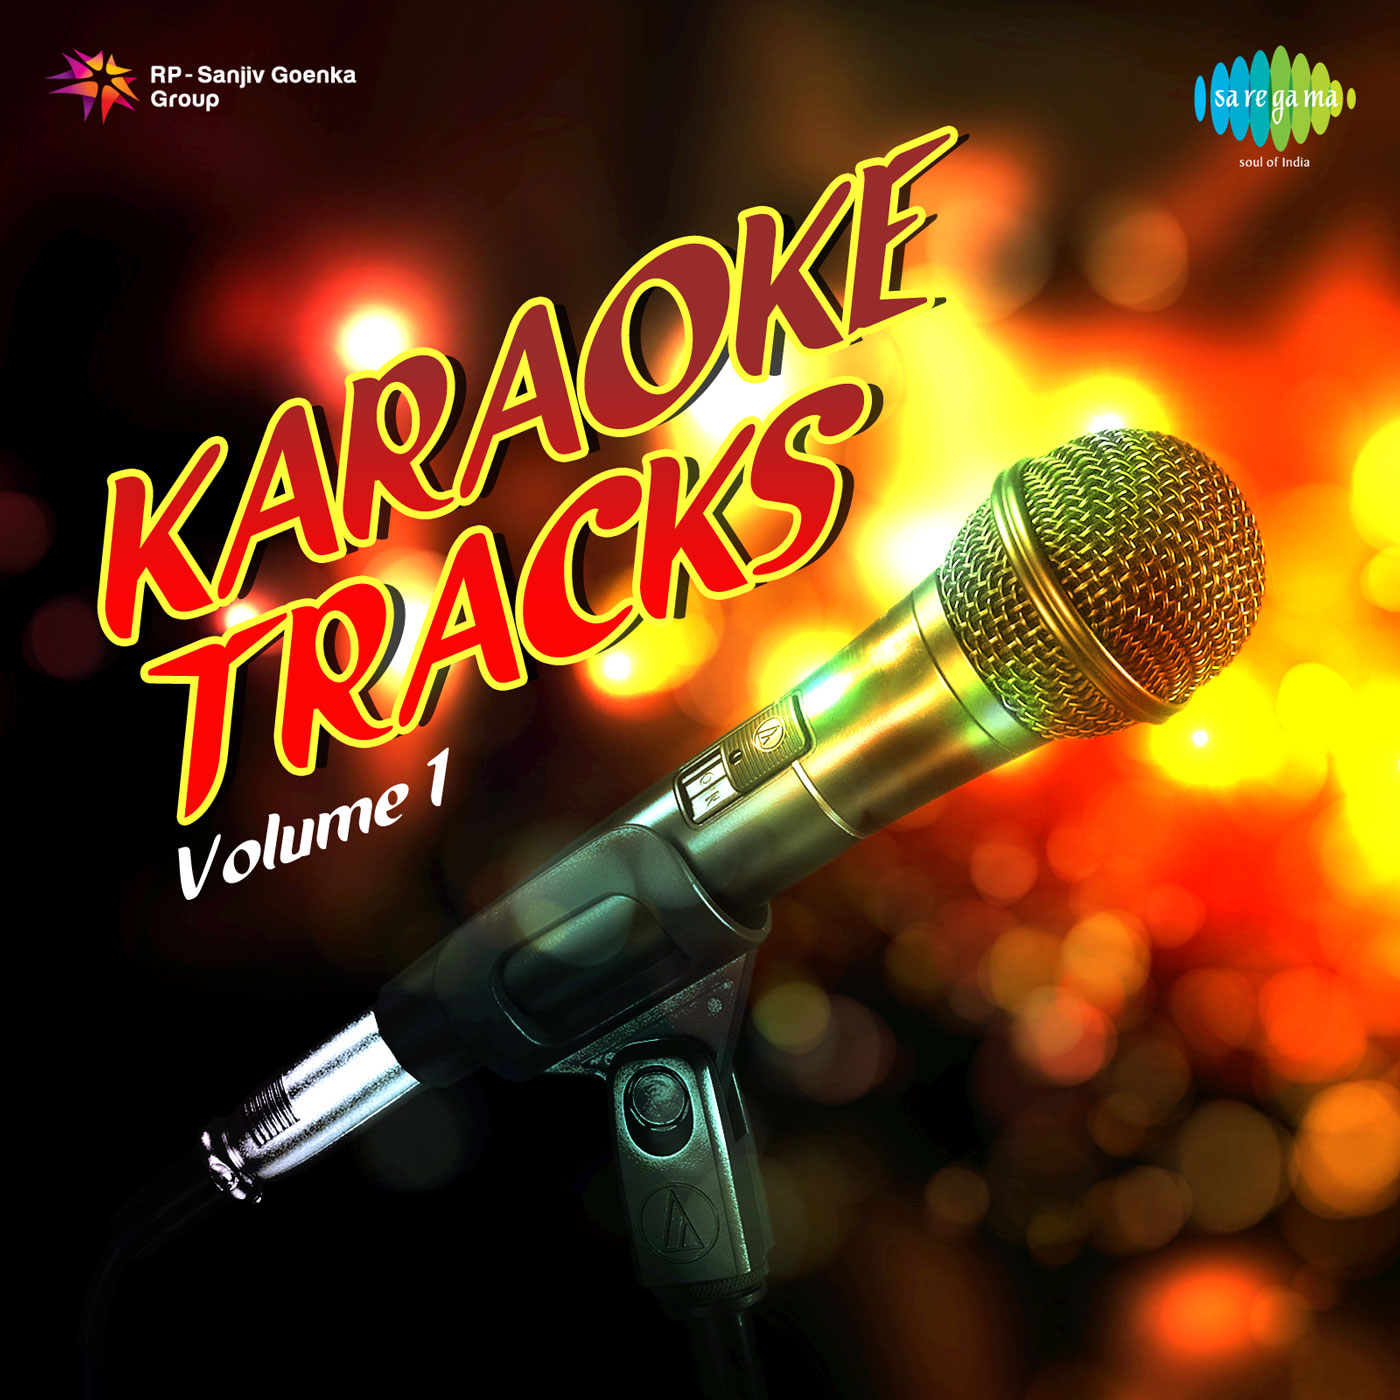 Karaoke Tracks Volume 1